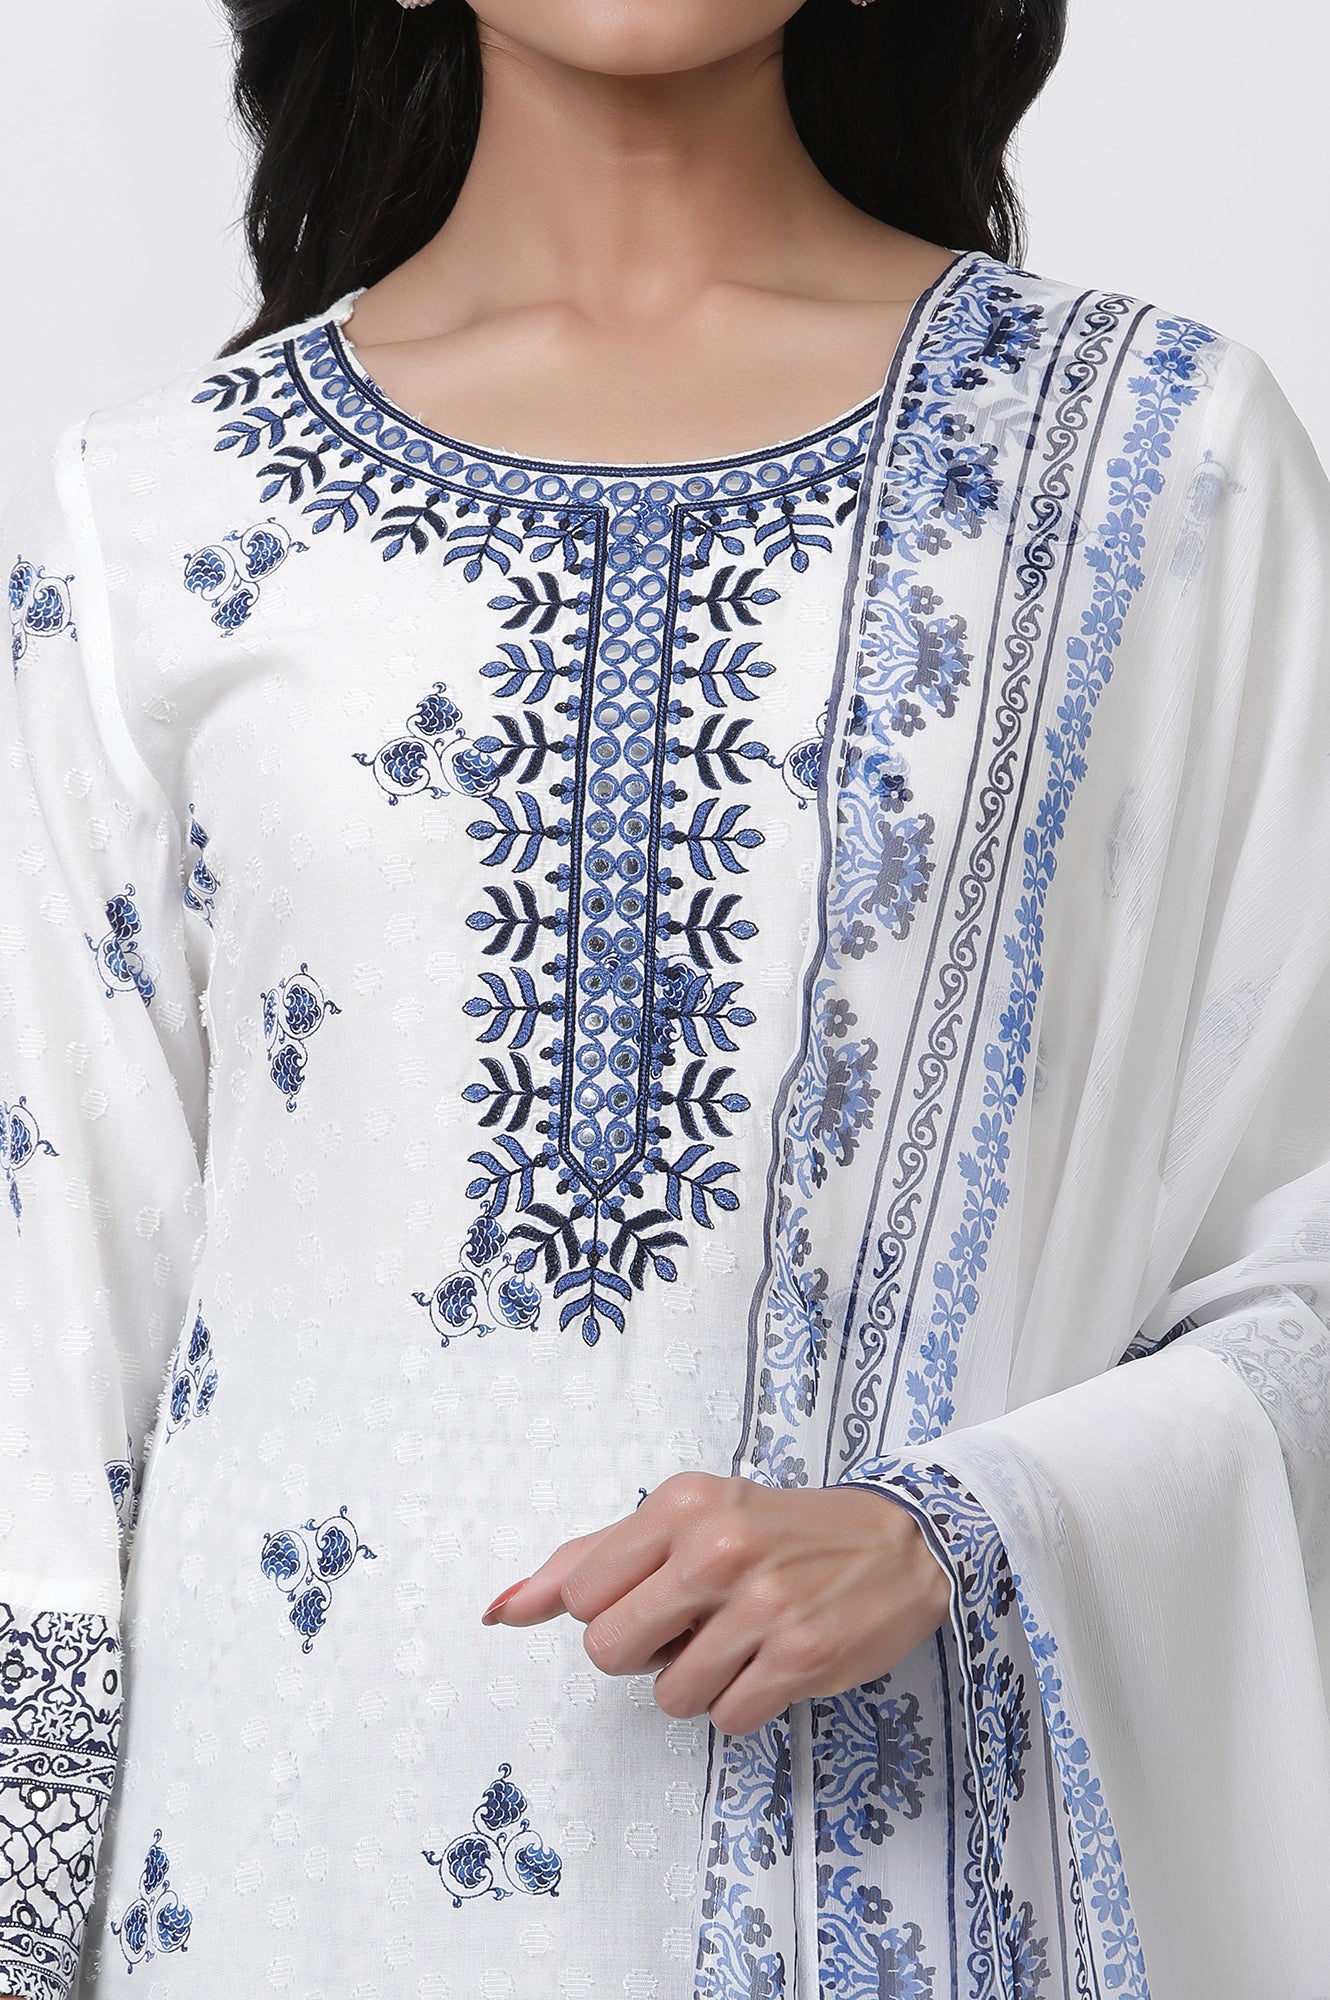 White Printed Kurta With Embroidery, Pants And Dupatta Set